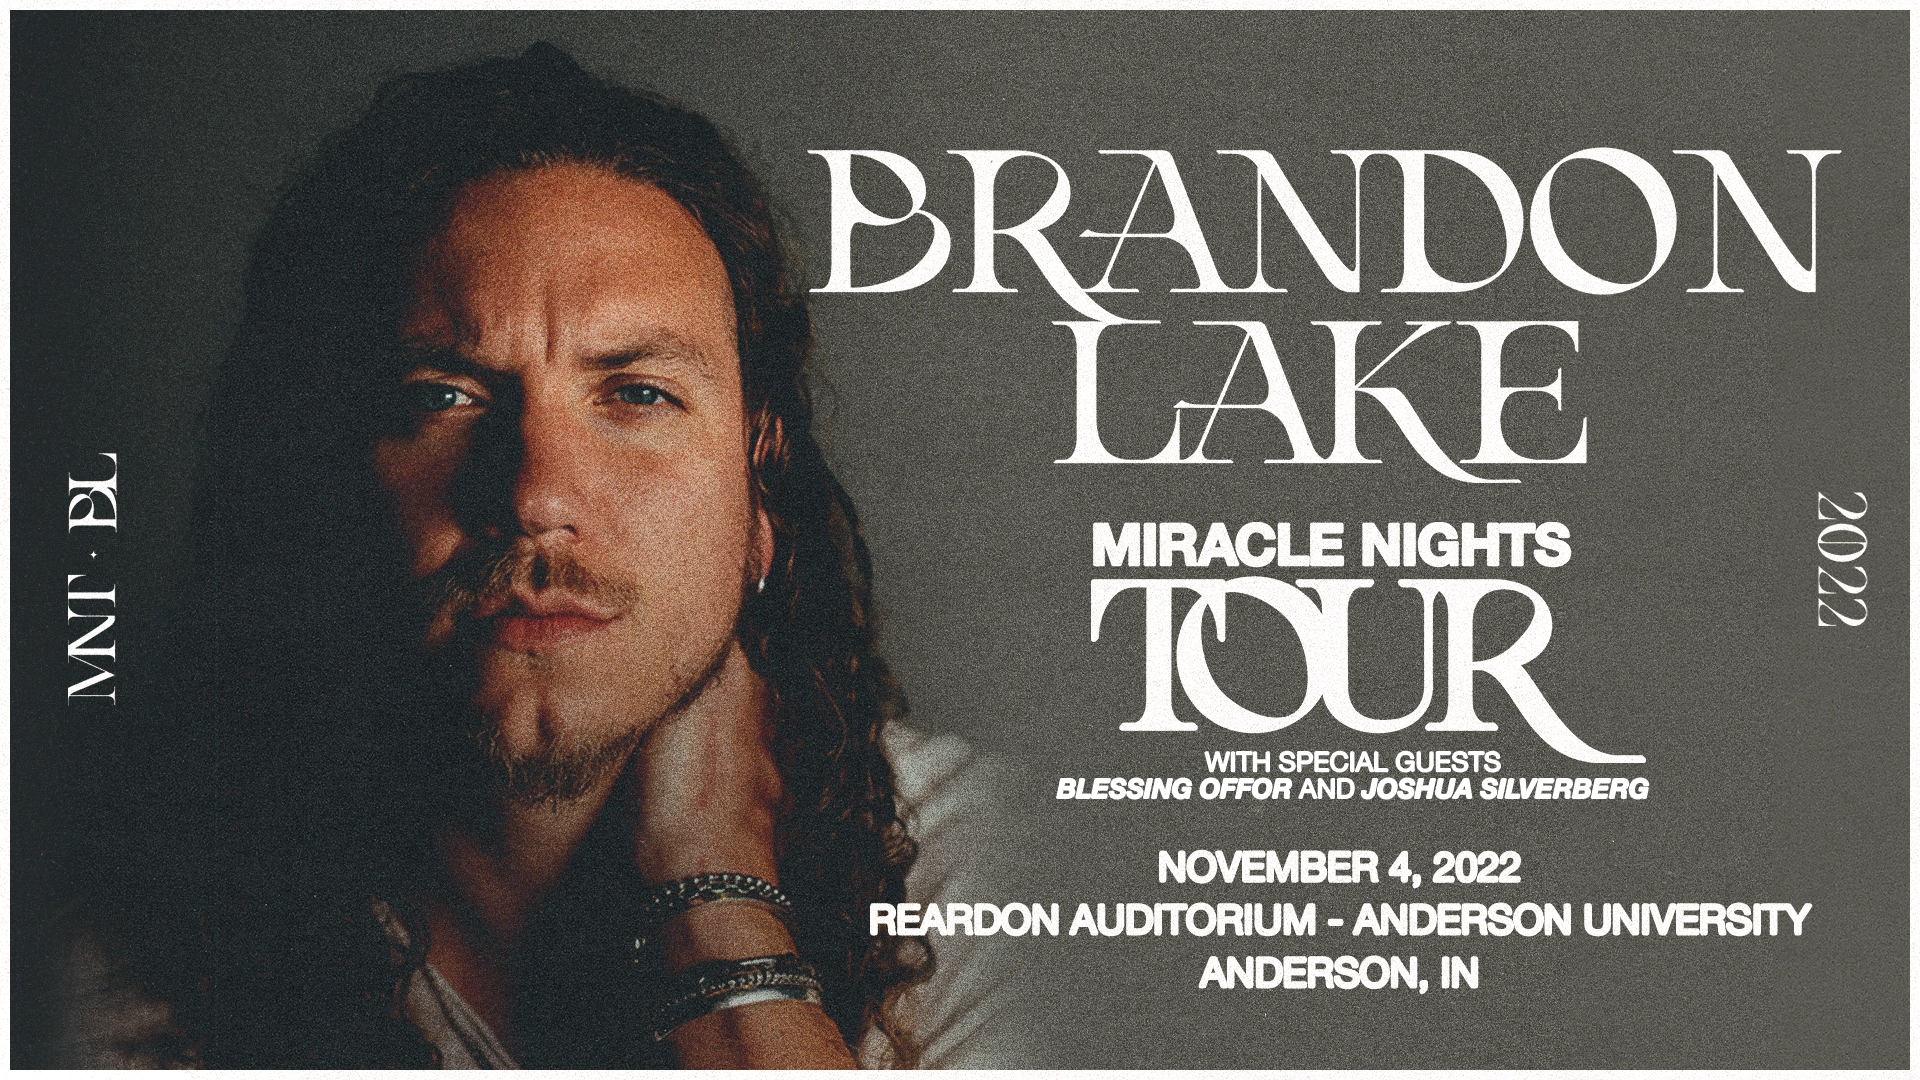 Brandon Lake headshot and concert promo